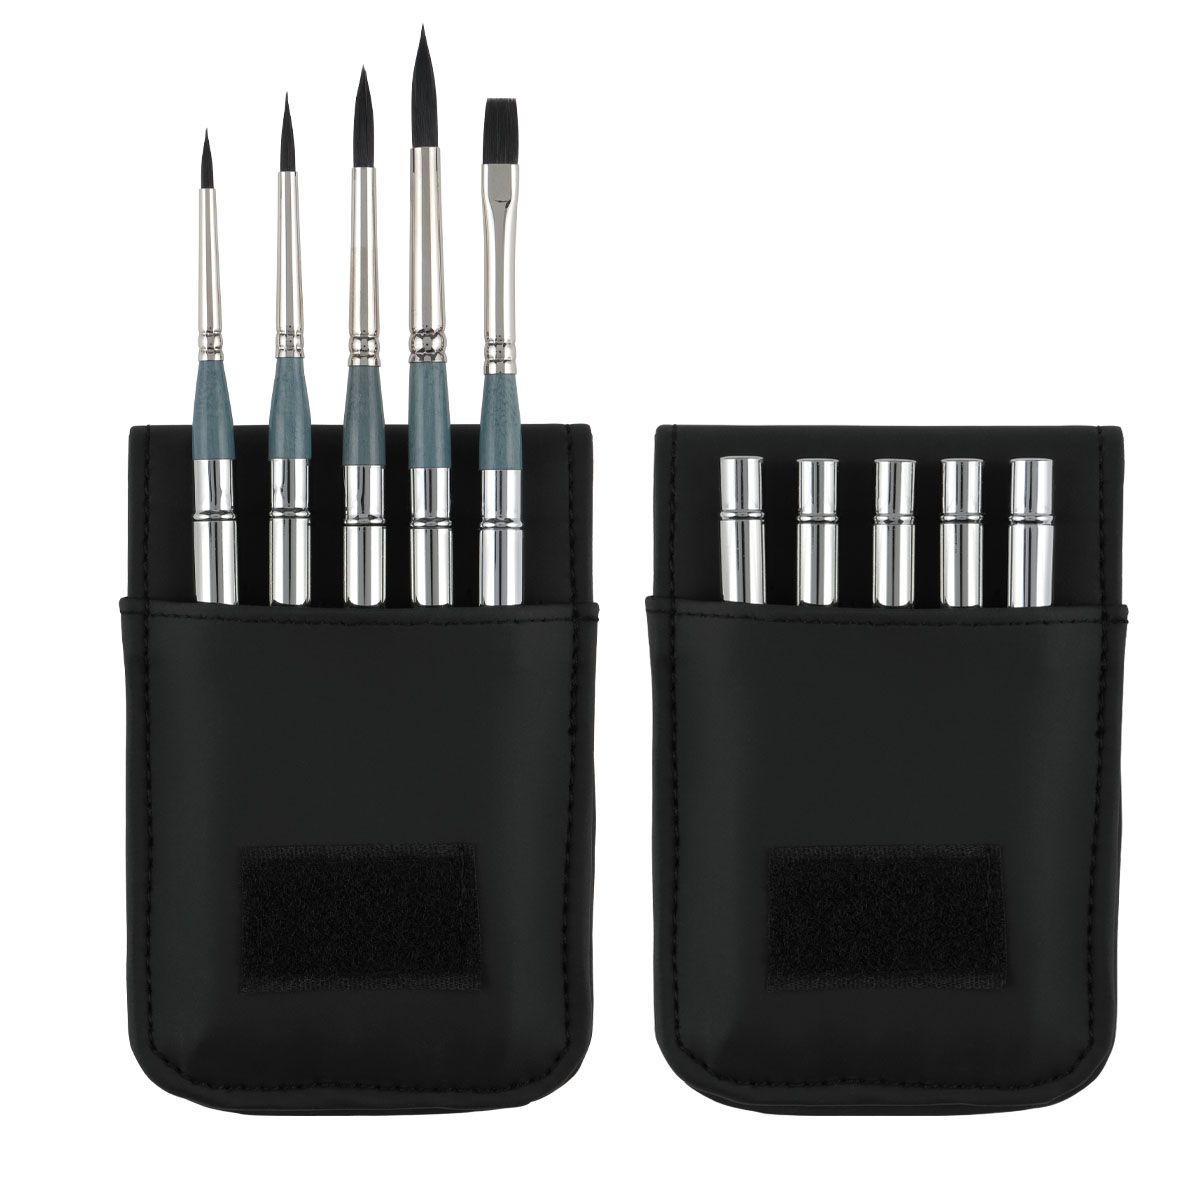 Handy pocket brush set includes Round sizes 2, 4, 6, 8, and 1/4" Flat.